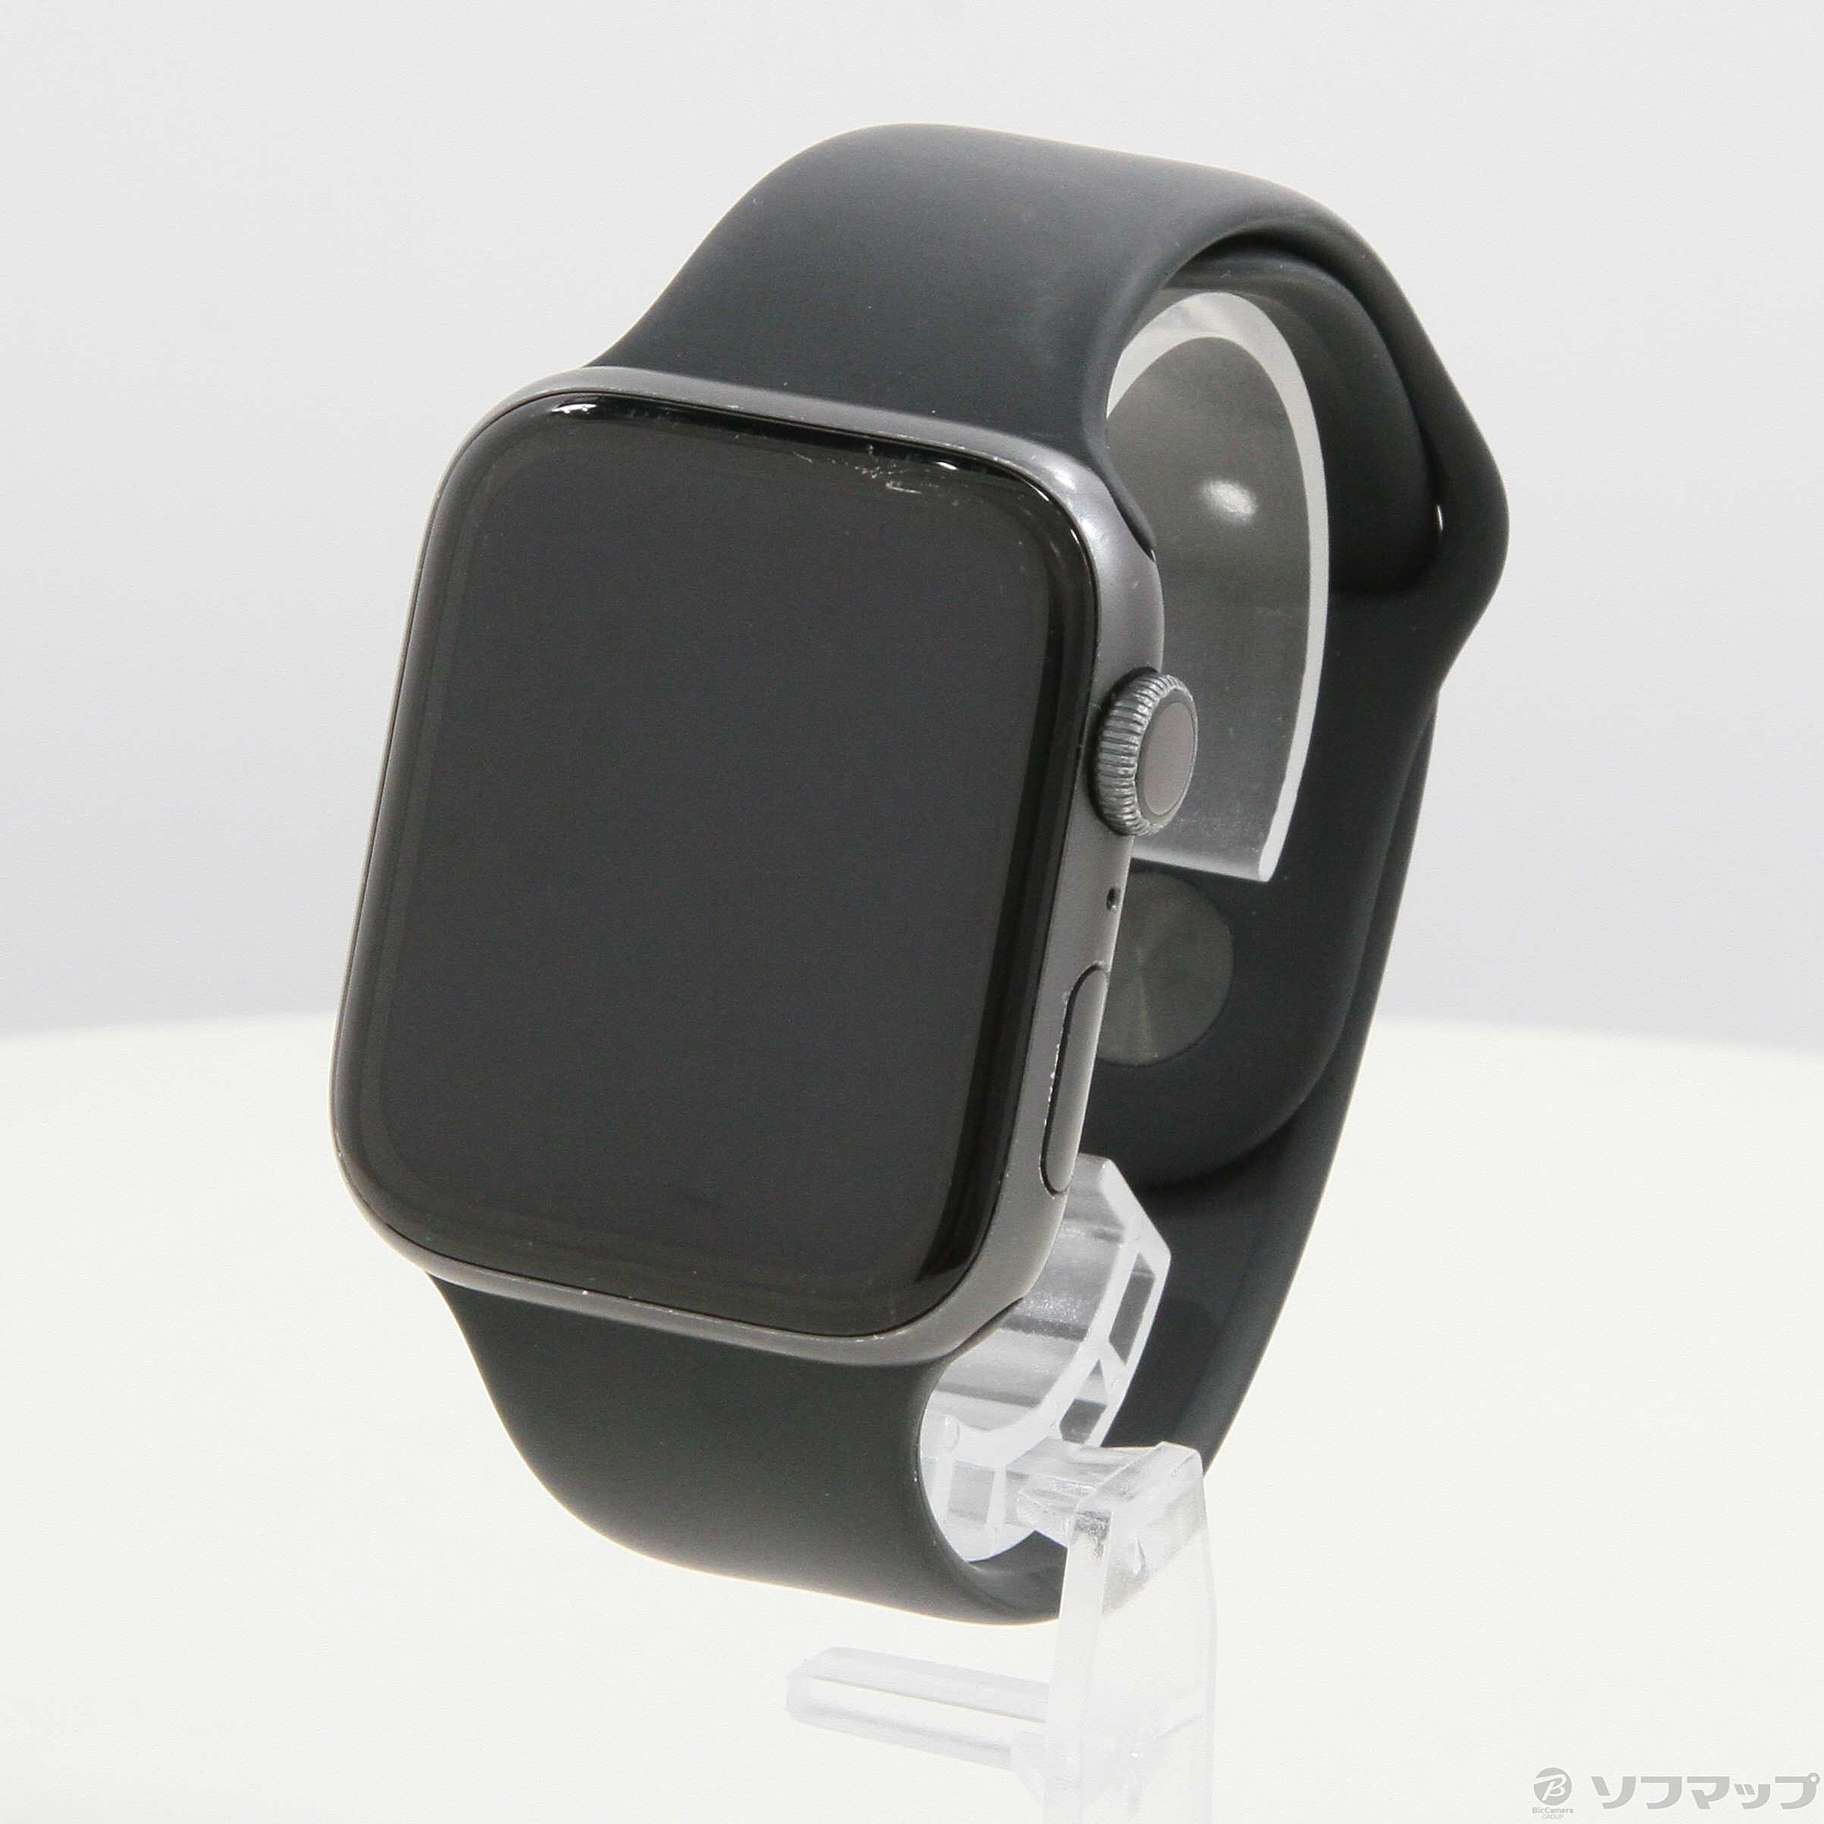 Apple Watch series 5 GPS スペースグレイ 44mm